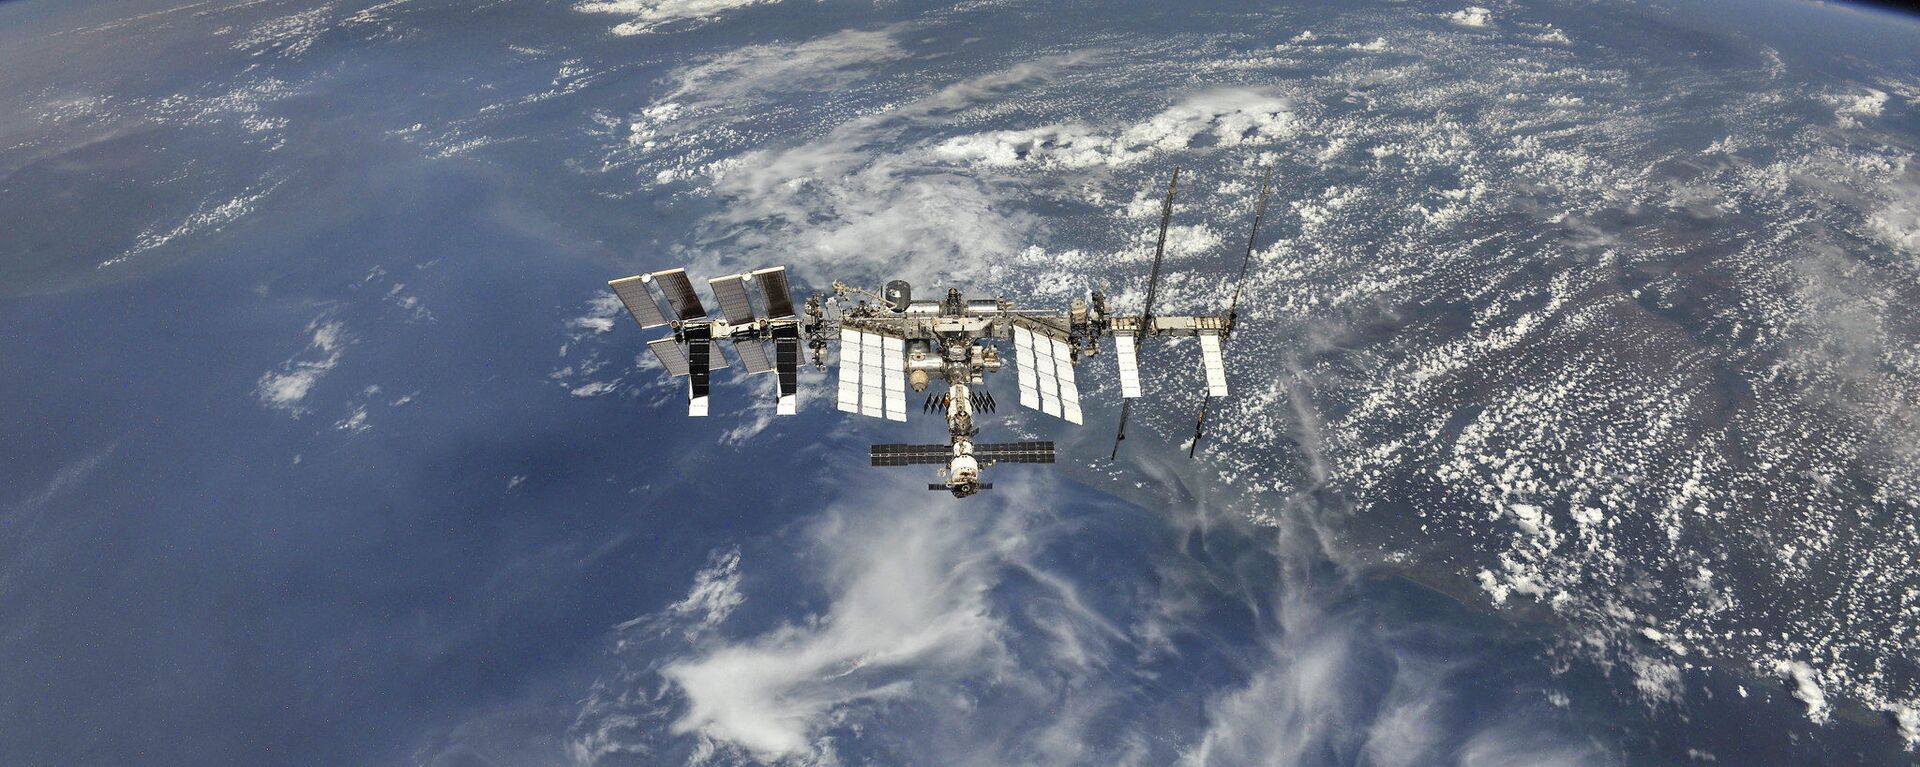 Estación Espacial Internacional (EEI) - Sputnik Mundo, 1920, 16.11.2021